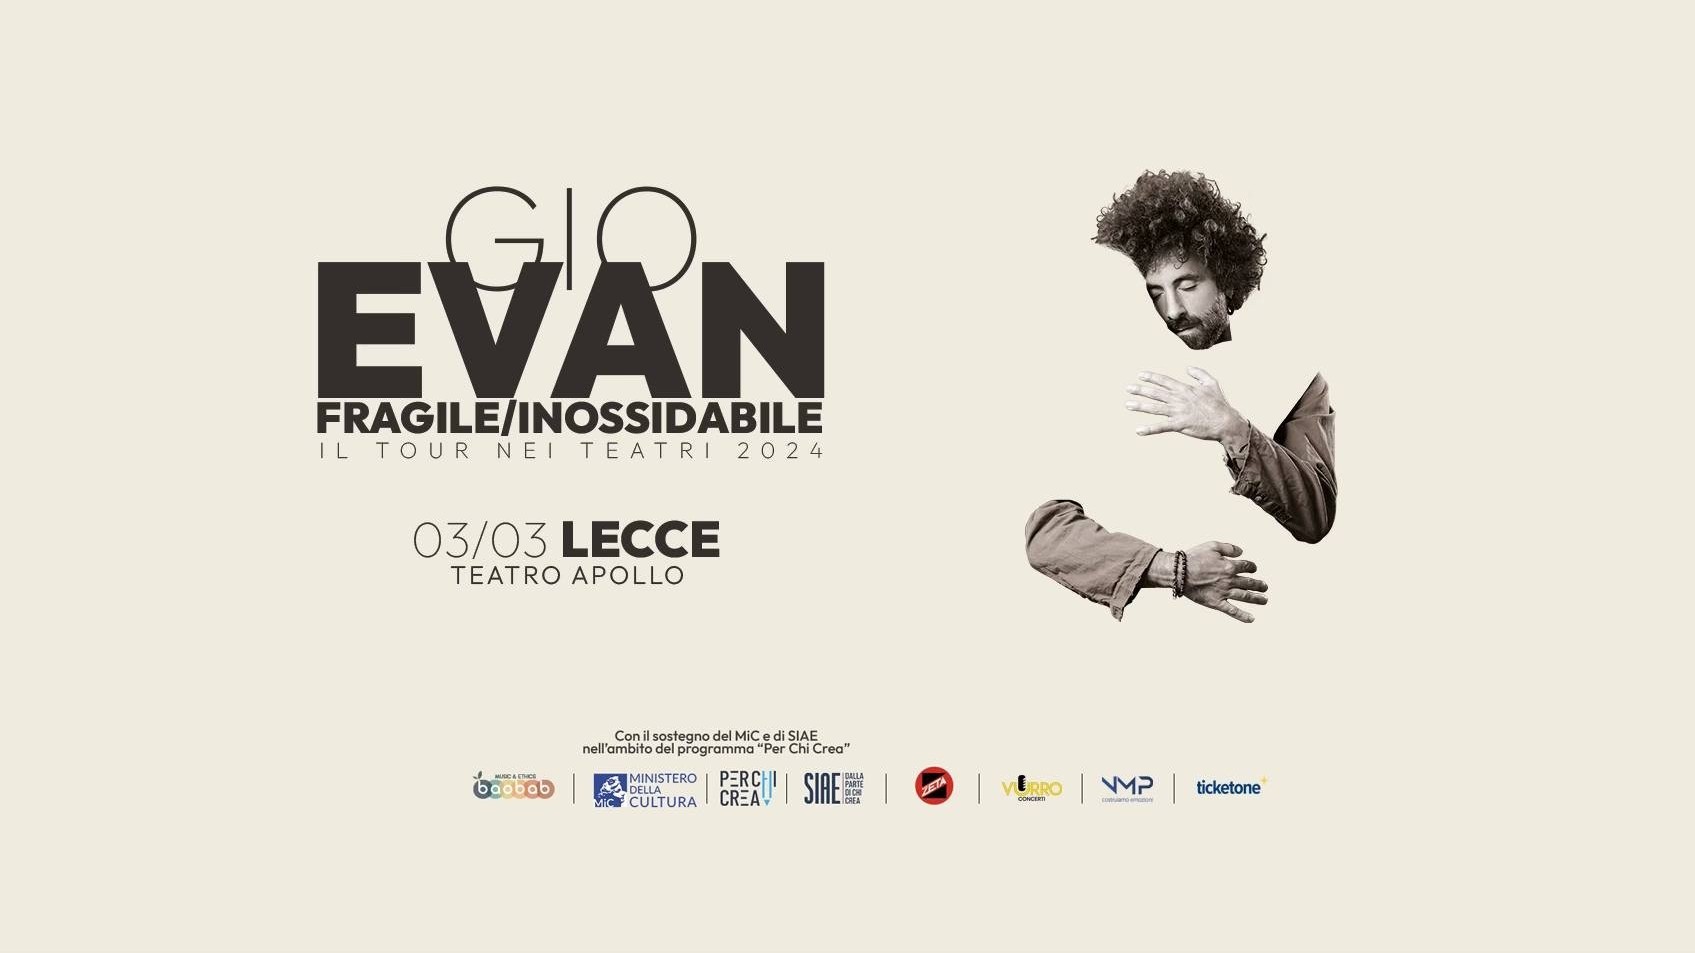 Gio Evan "Fragile/inossidabile Tour"